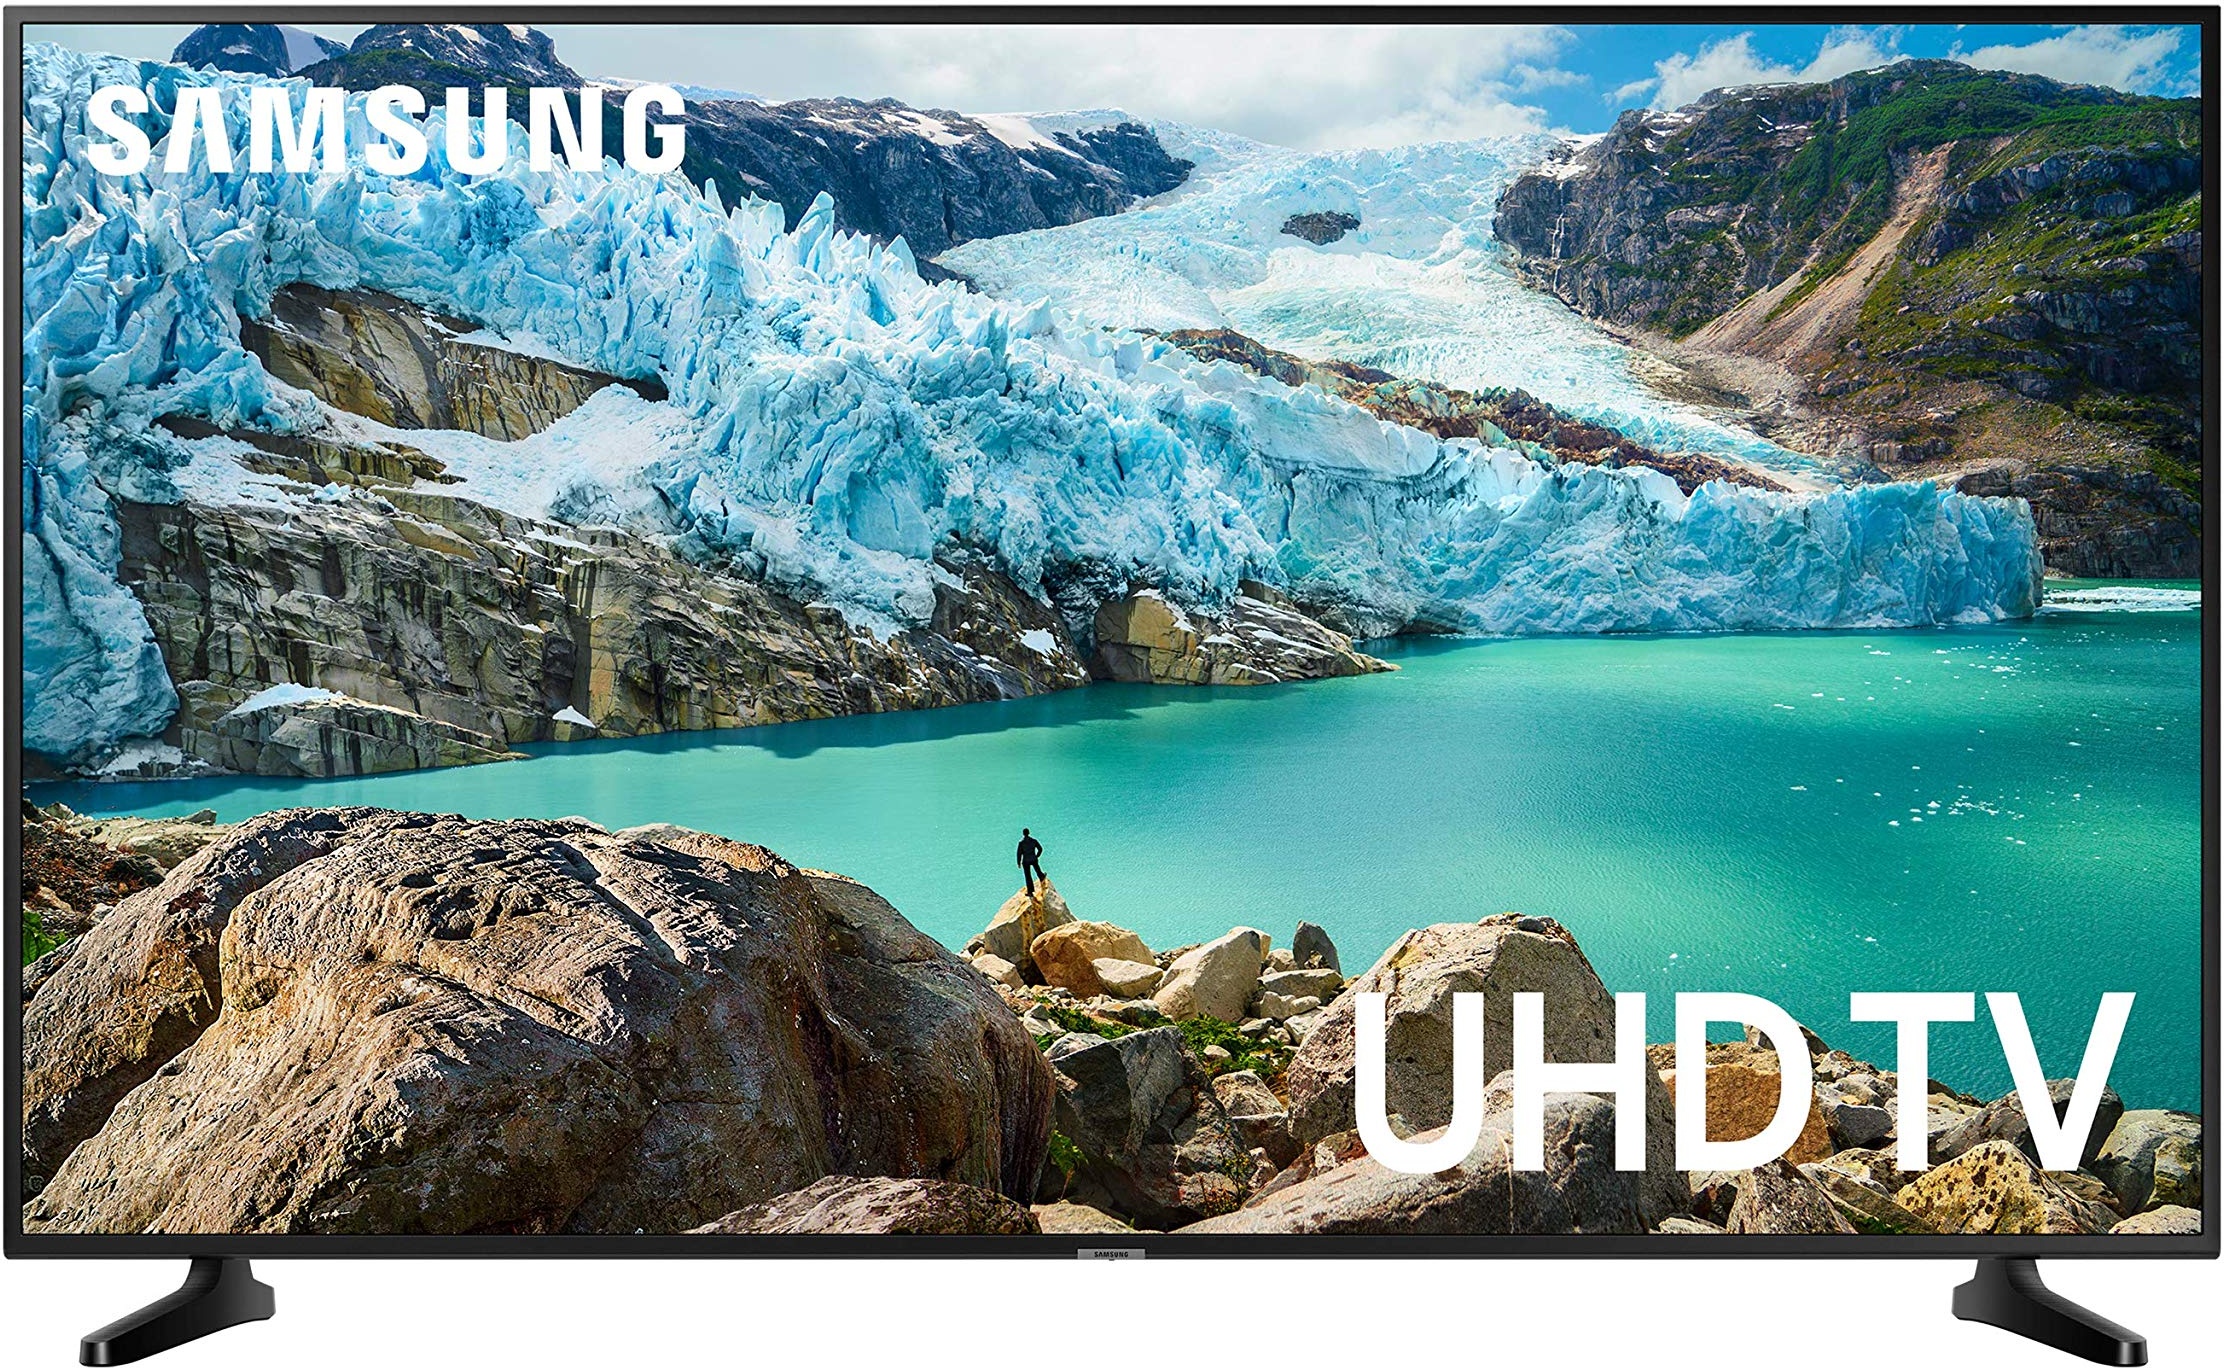 Samsung RU7099 108 cm (43 Zoll) LED Fernseher (Ultra HD, HDR, Triple Tuner, Smart TV) [Modelljahr 2019]